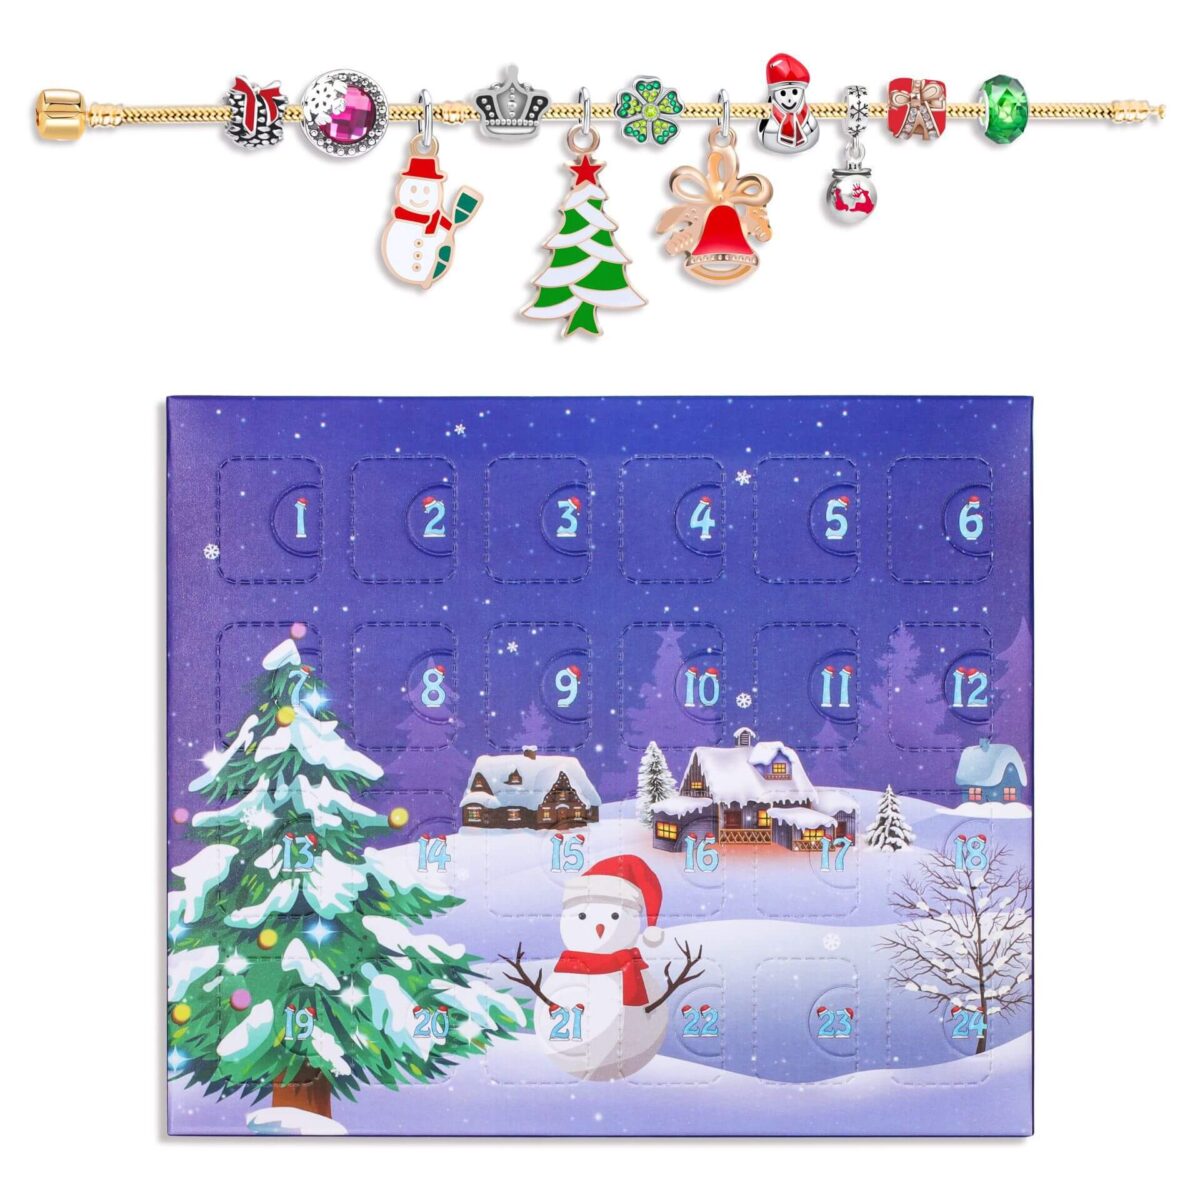 Christmas Advent Calenar Countdown Blind Box DIY Jewelry Bracelet Gift Box Description Image 5 1